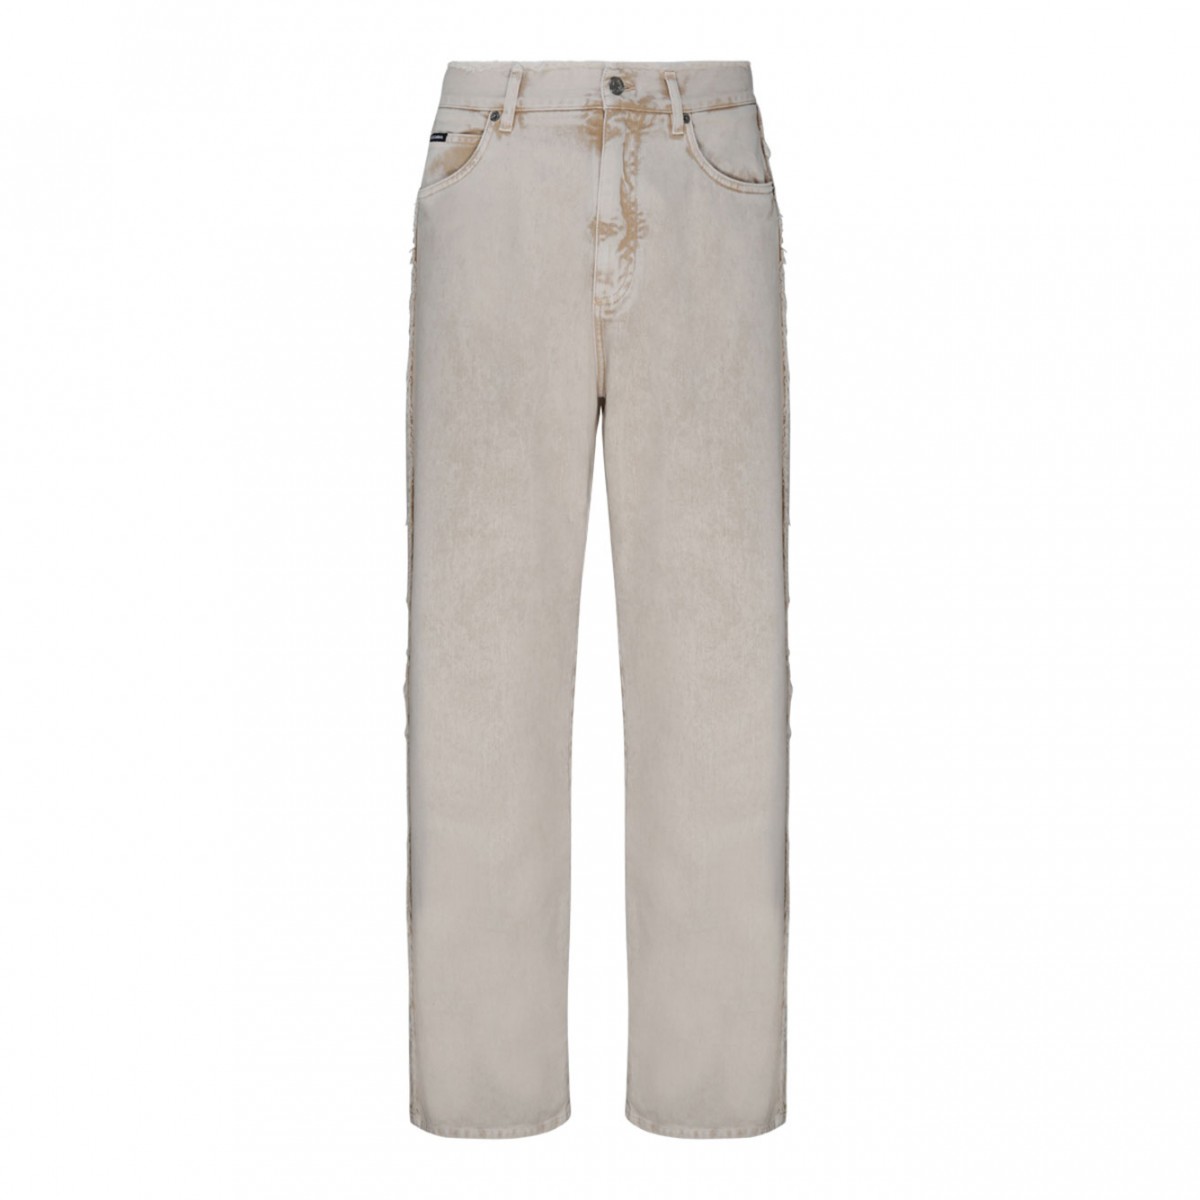 Light Beige Cotton Frayed Trim Jeans